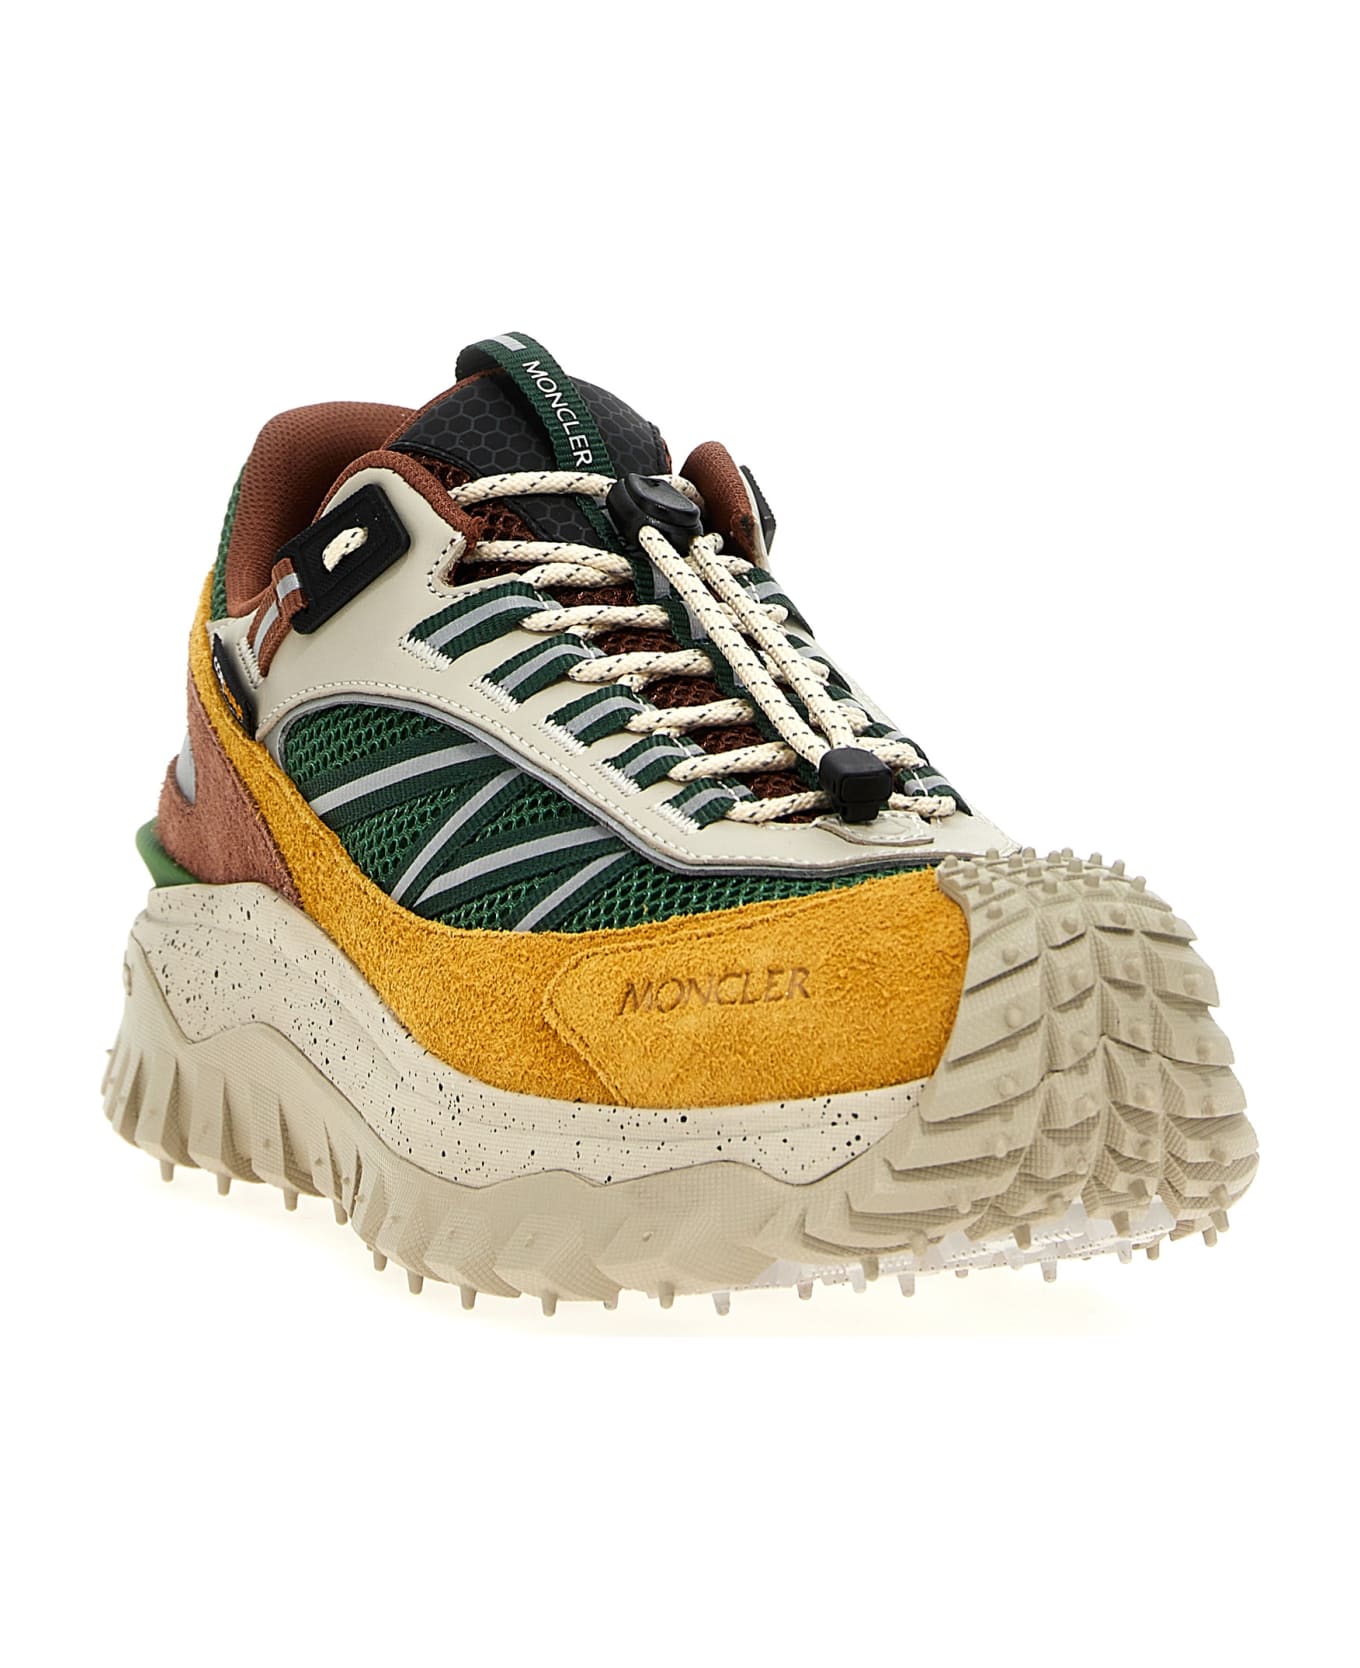 Moncler 'trailgrip' Sneakers - Multicolor